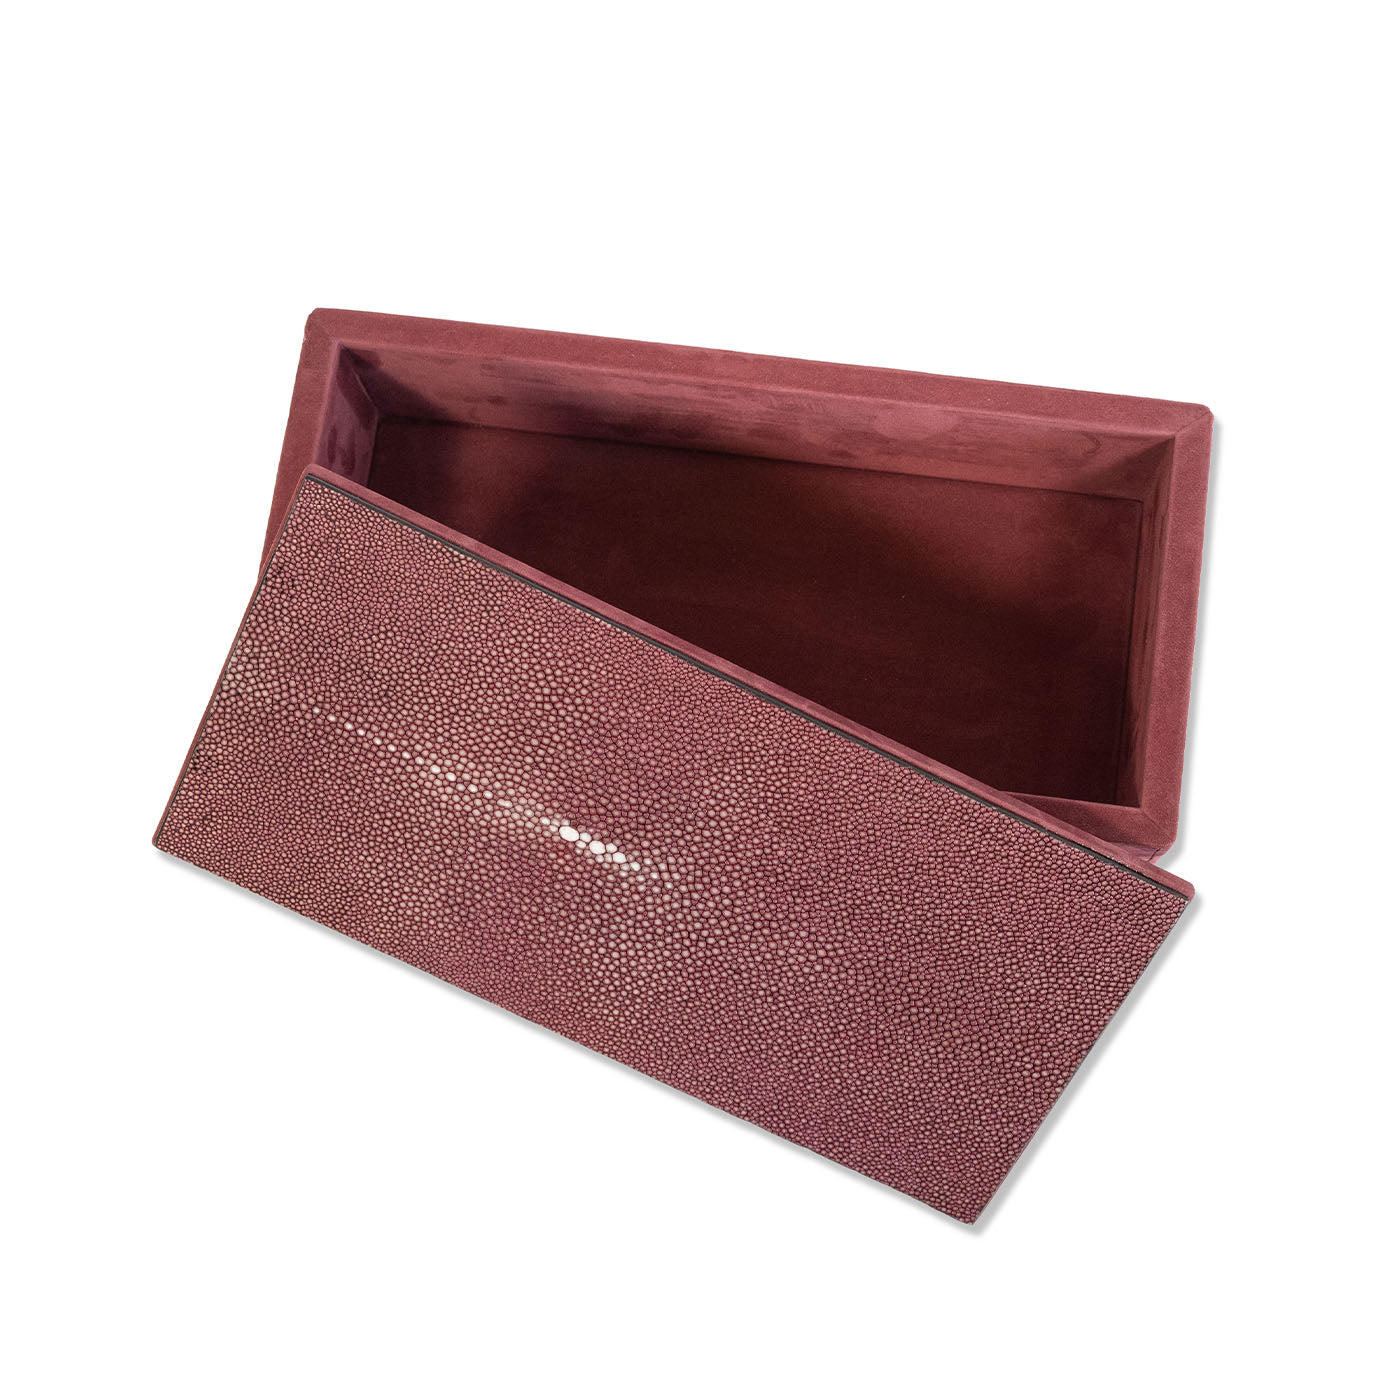 Stachelrochen Persisch Rot Nubuk Leder Box - Alternative Ansicht 5